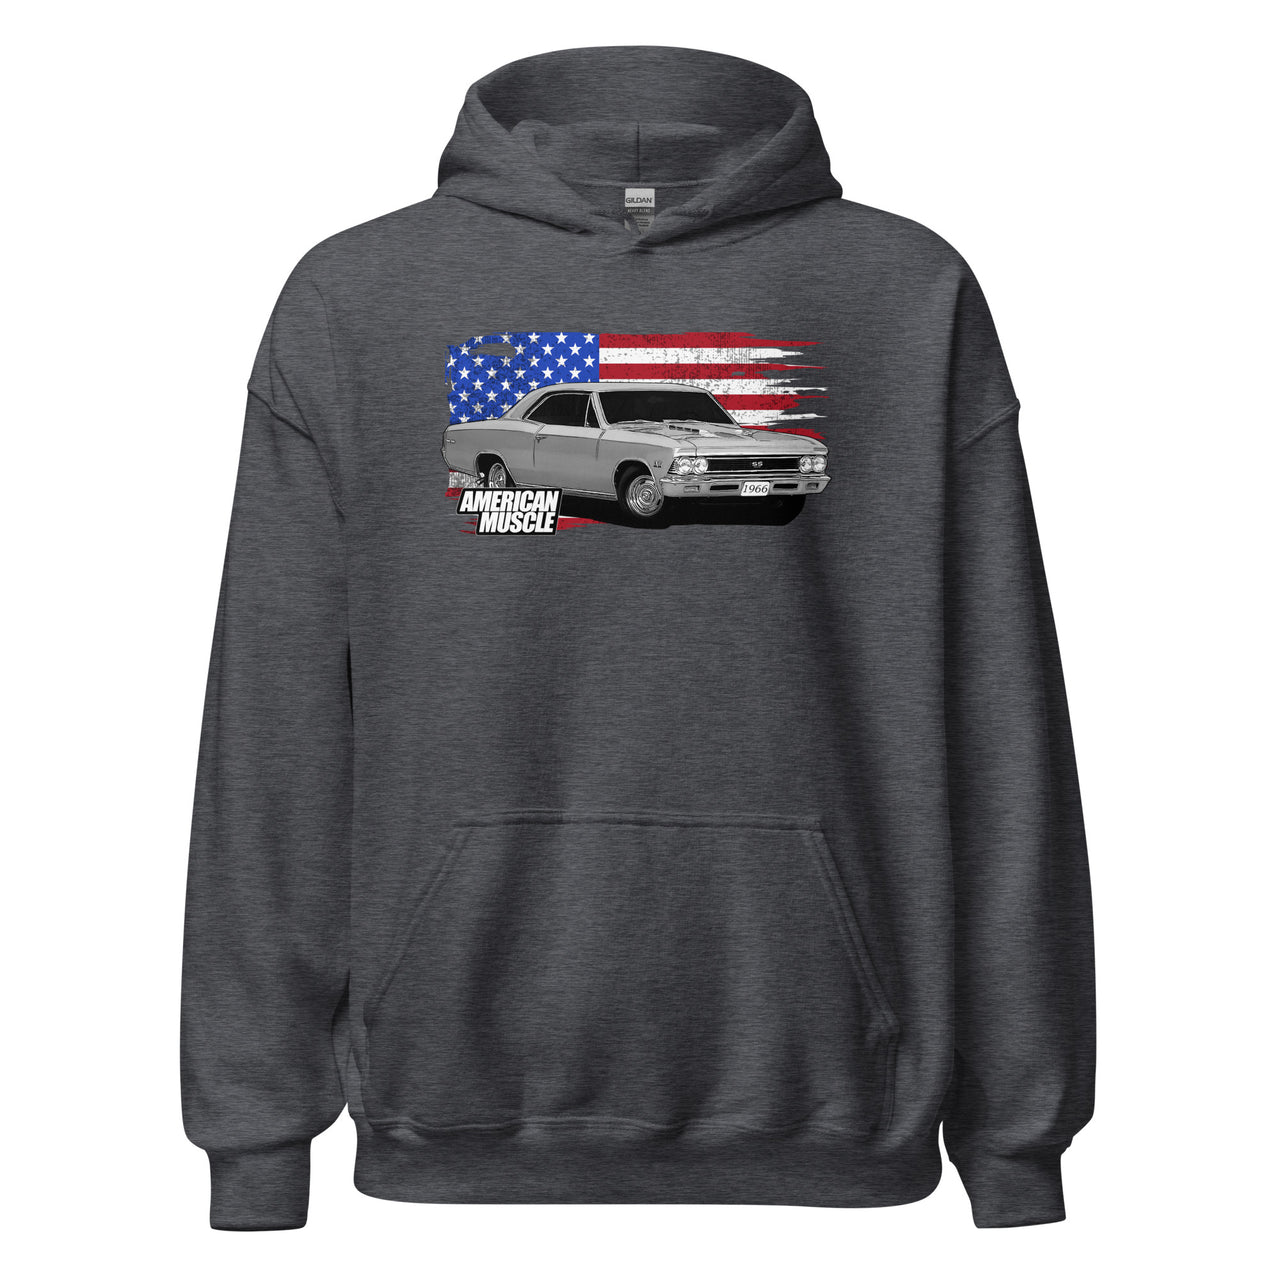 1966 Chevelle Car Hoodie Sweatshirt With American Flag design - in grey